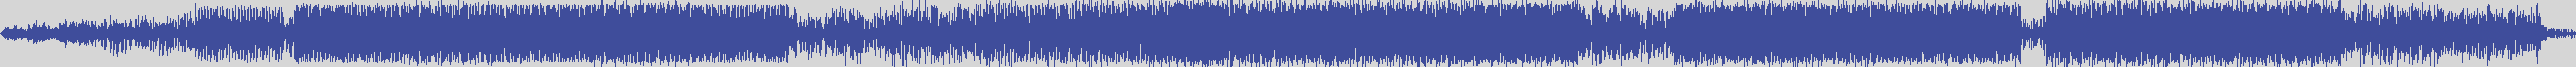 atomic_recordings [AR009] Christian Hornbostel - Wanna Fly Away [Roy Malone Club Mix] audio wave form